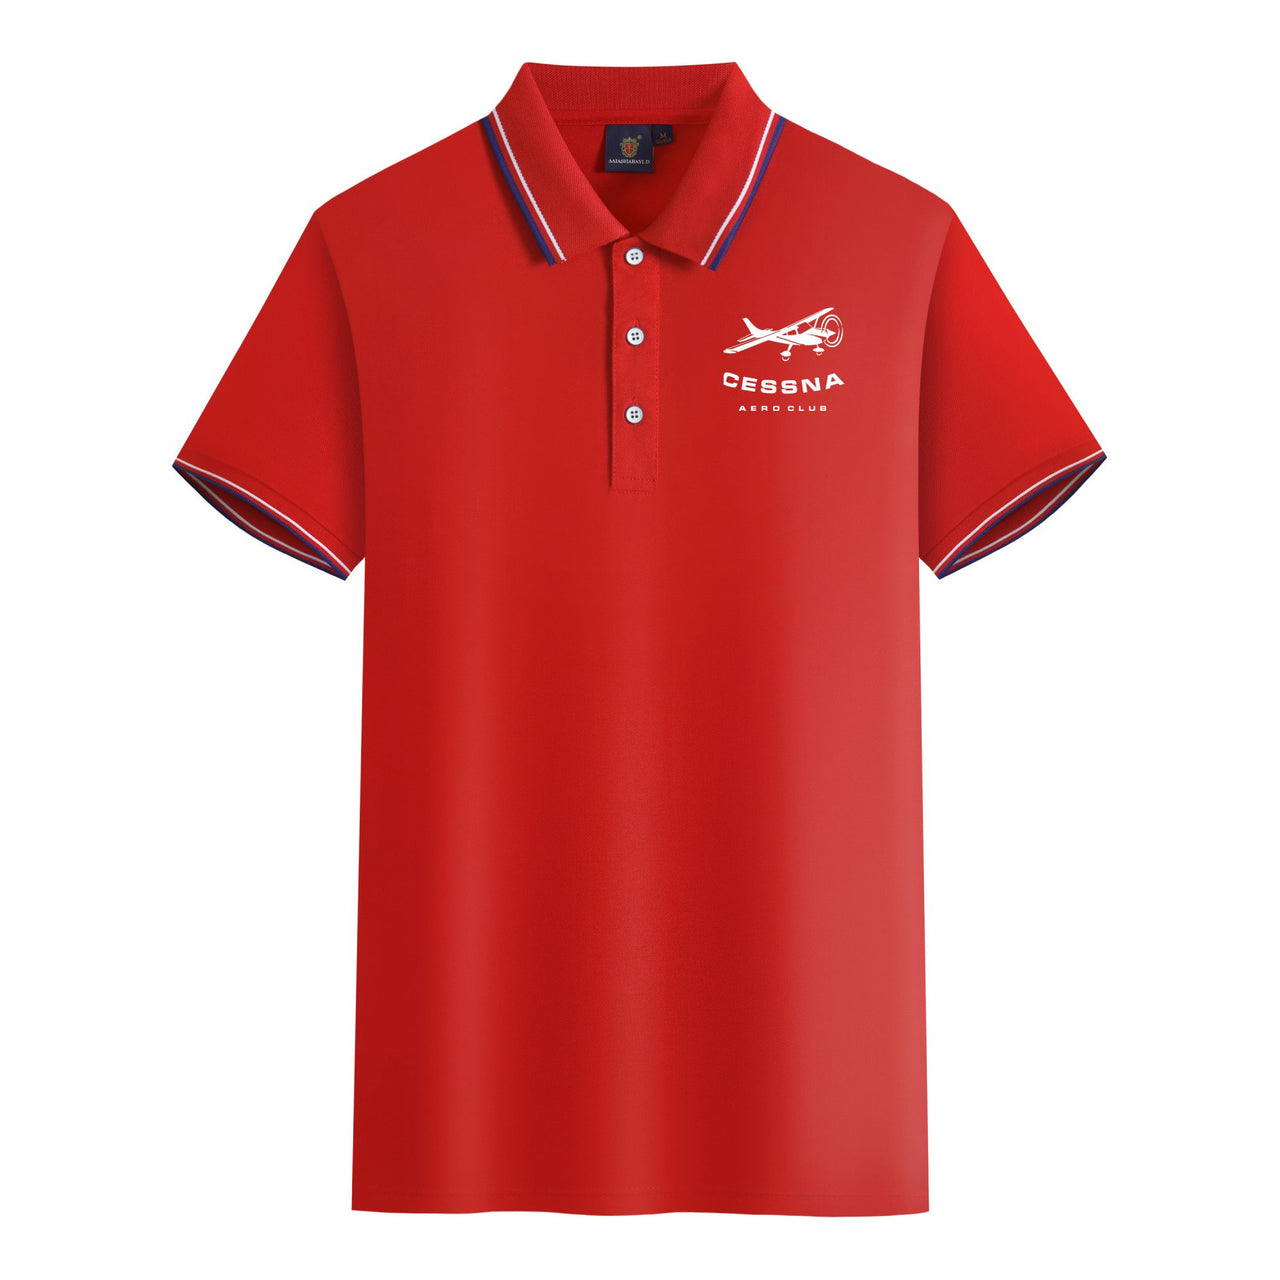 Cessna Aeroclub Designed Stylish Polo T-Shirts